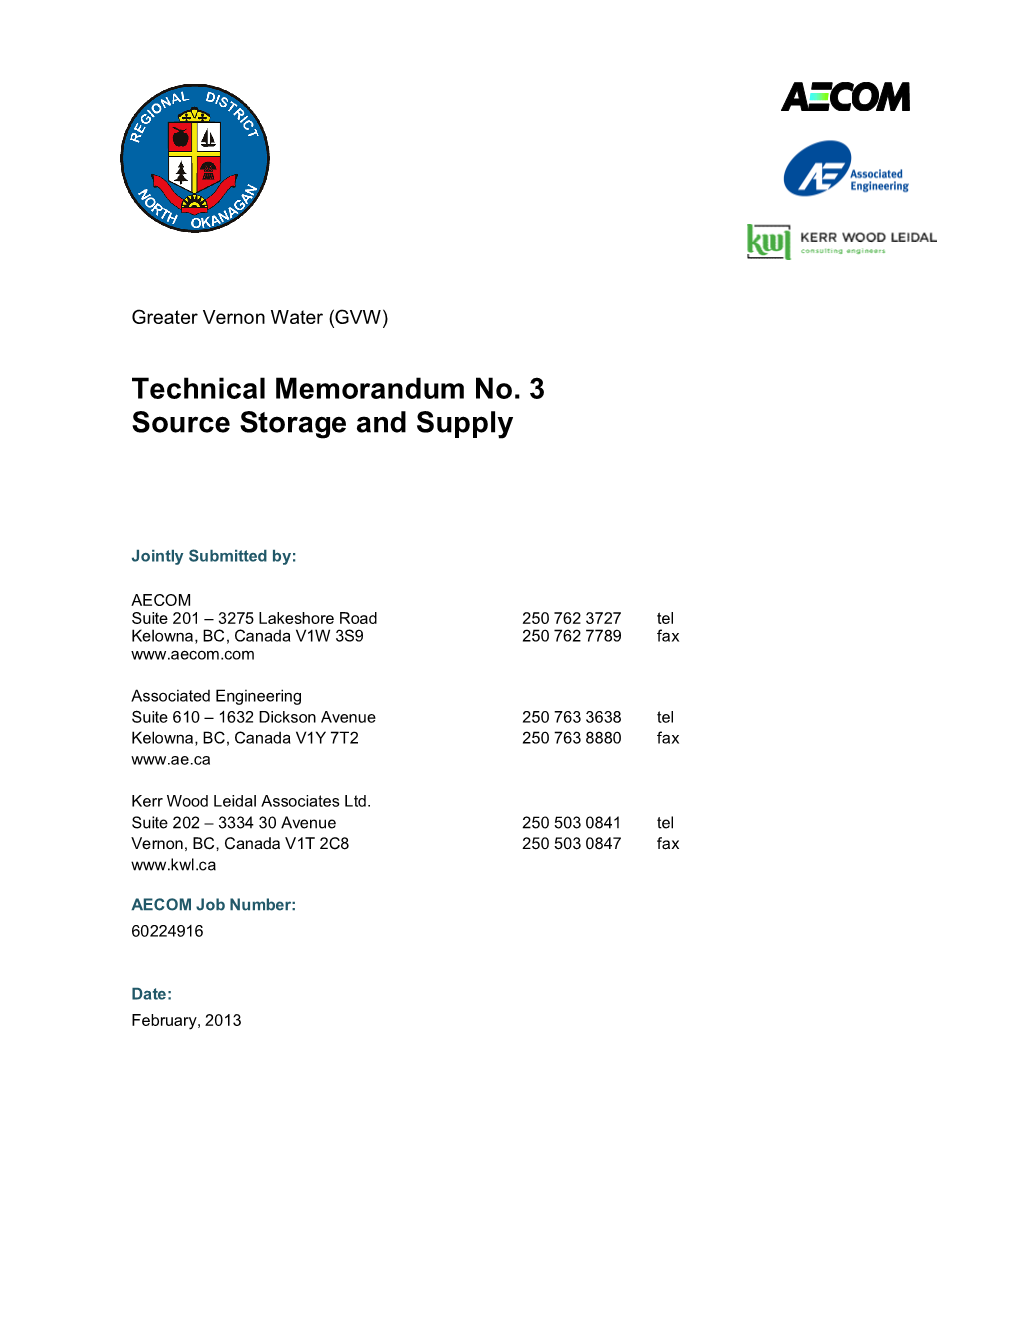 Technical Memorandum No. 3 Source Storage and Supply